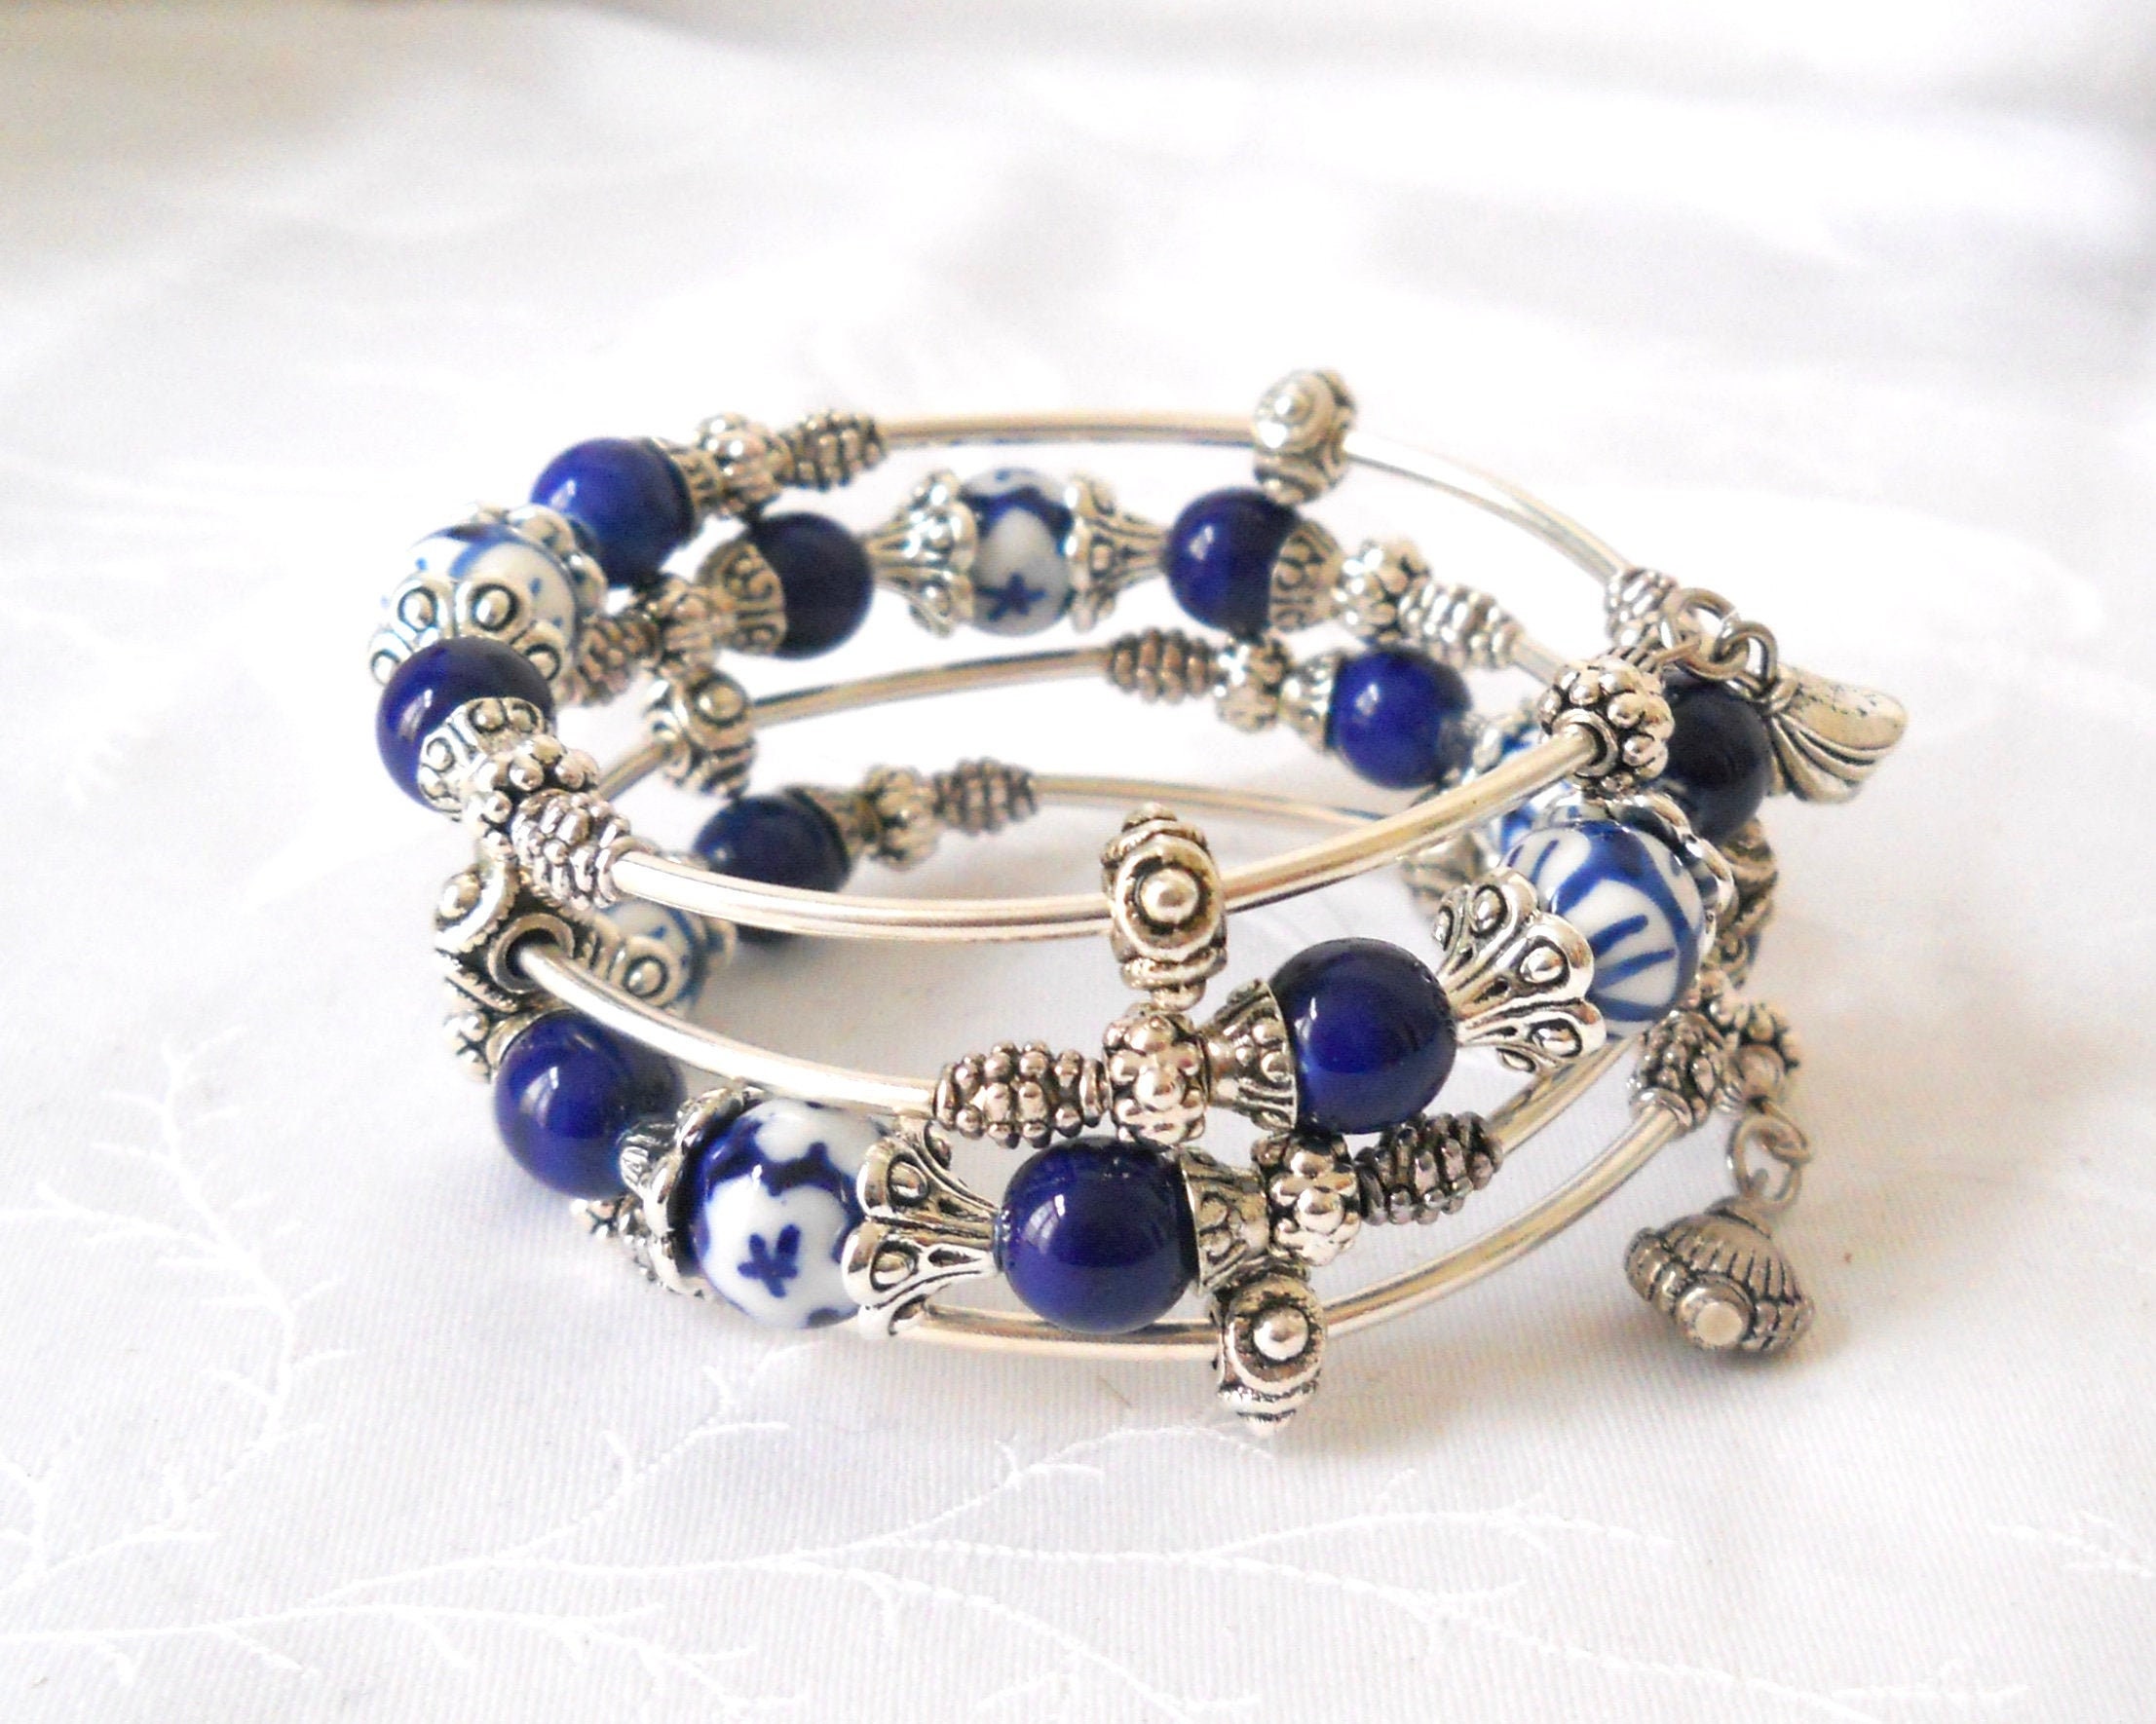 Royal Delft Blue Bracelet, Memory Wire Blue Bracelet, Gift for Oma